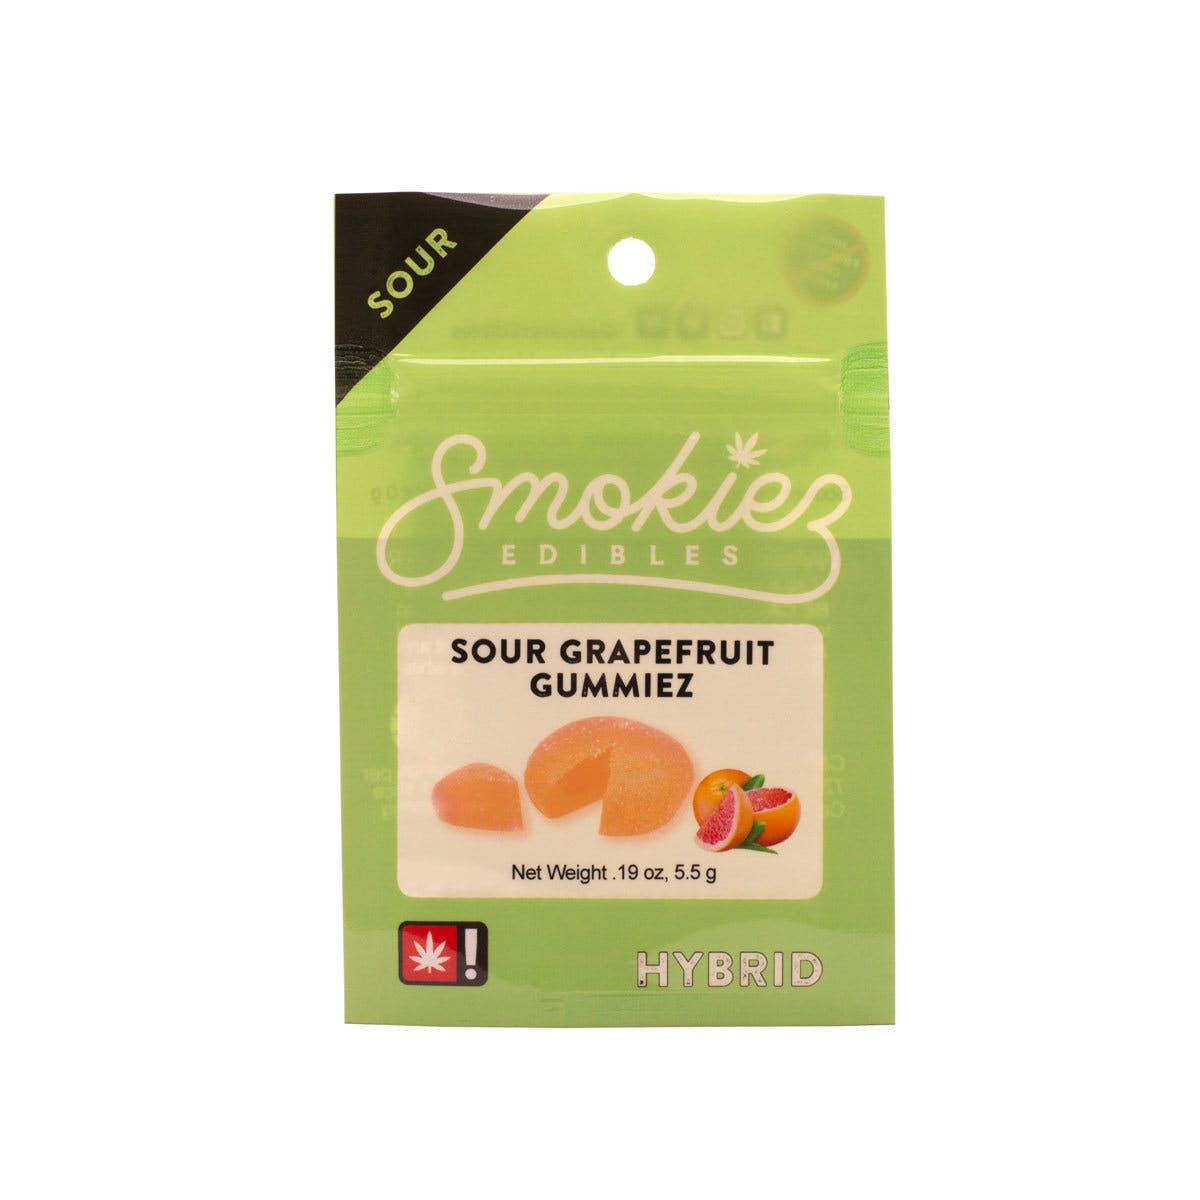 edible-smokiez-edibles-hybrid-sour-grapefruit-gummiez-2c-50mg-2c-10-srv